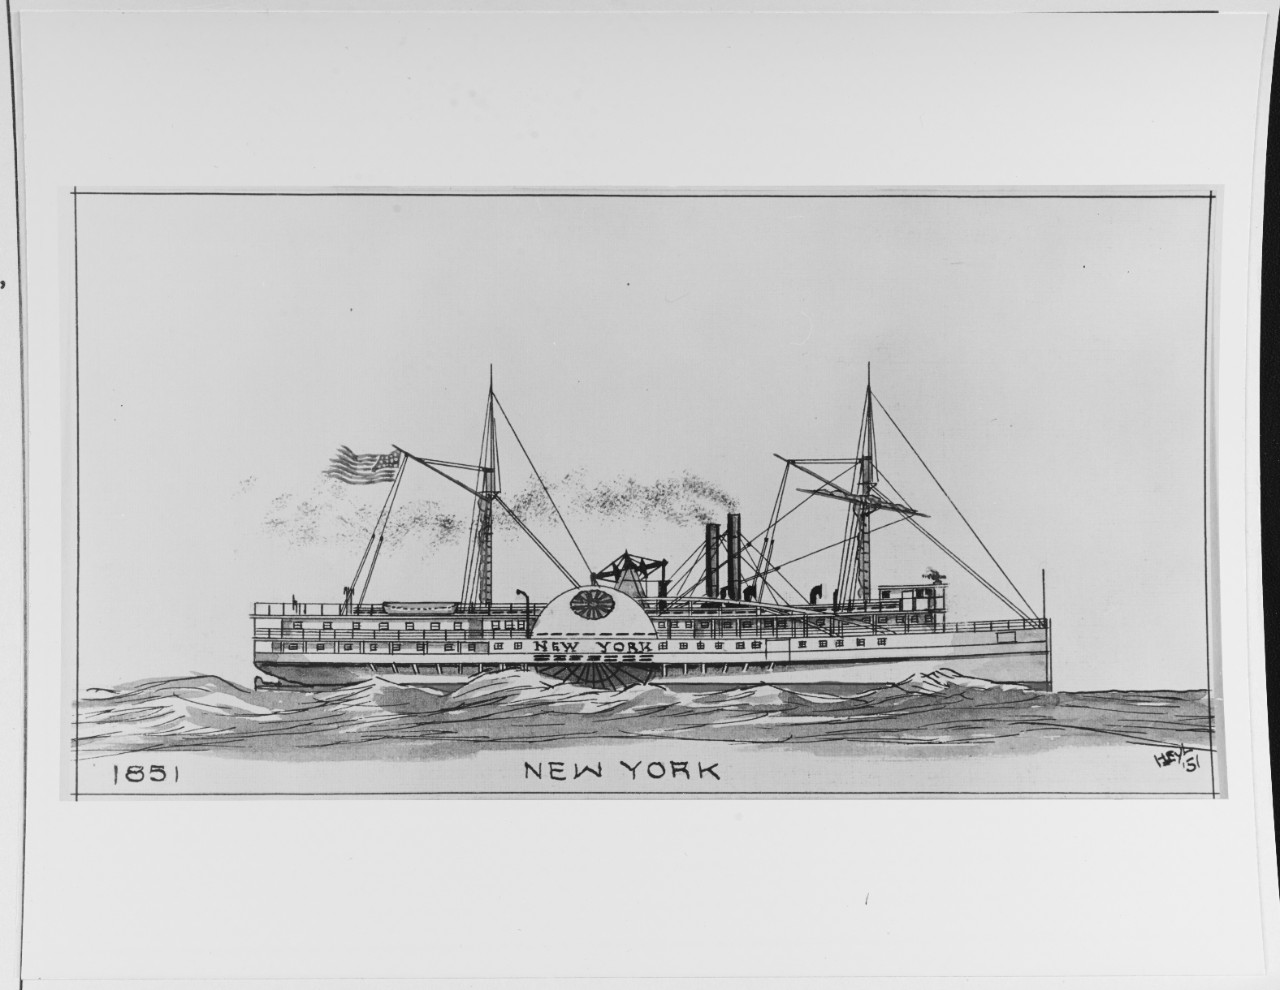 NEW YORK (American merchant steamer, 1851-1890)